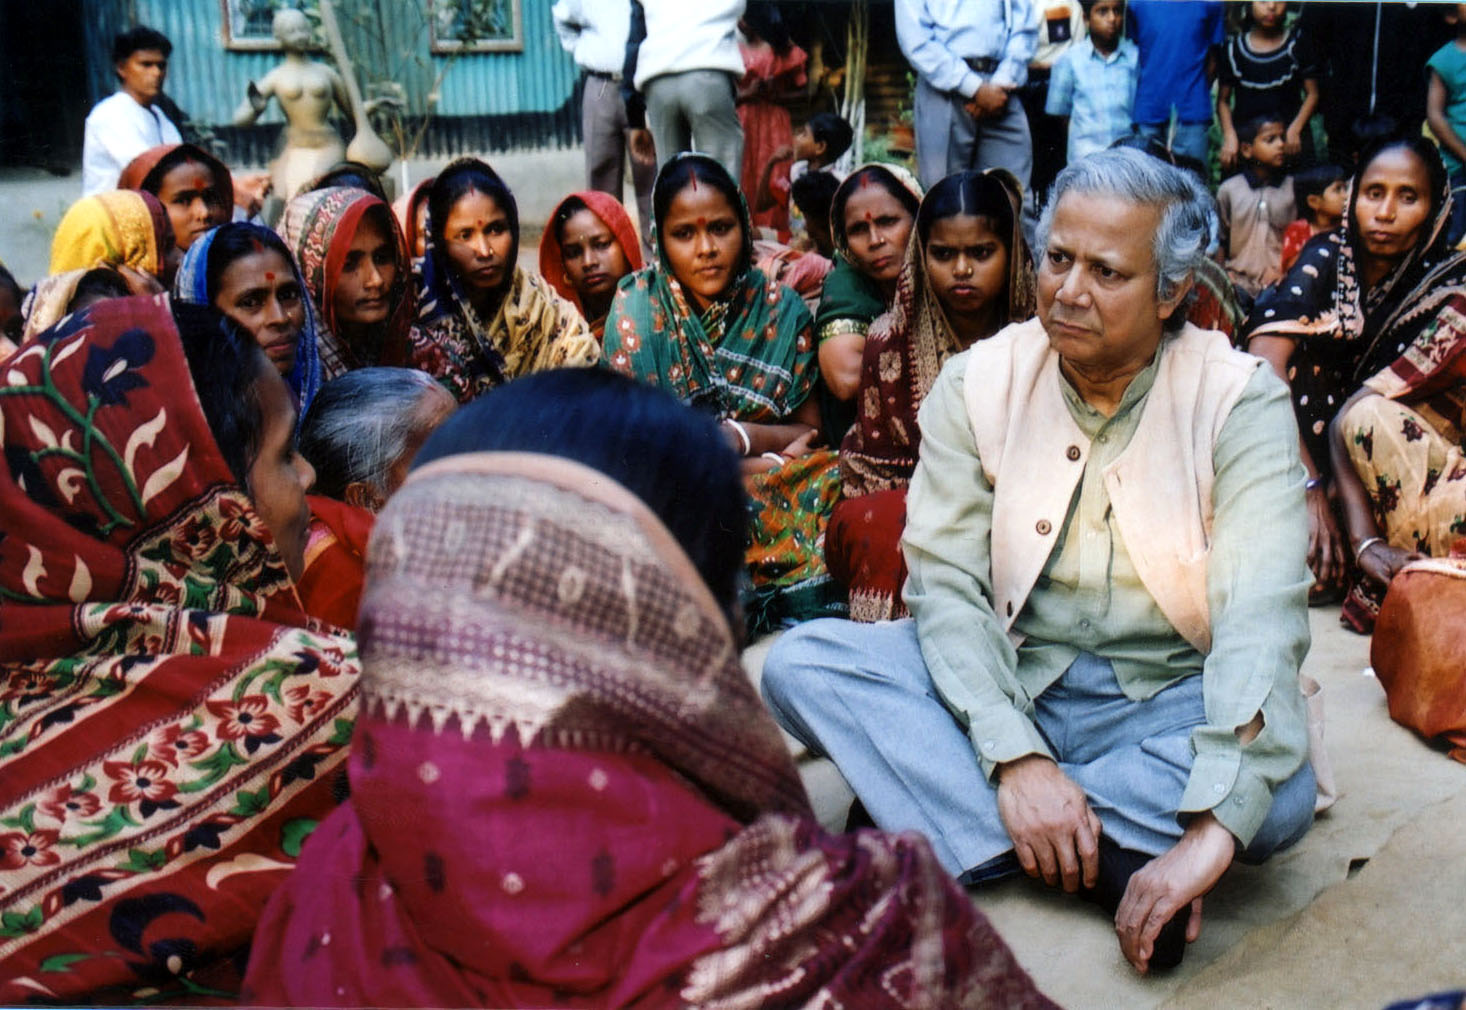 Prof. Muhammad Yunus with Grameen members